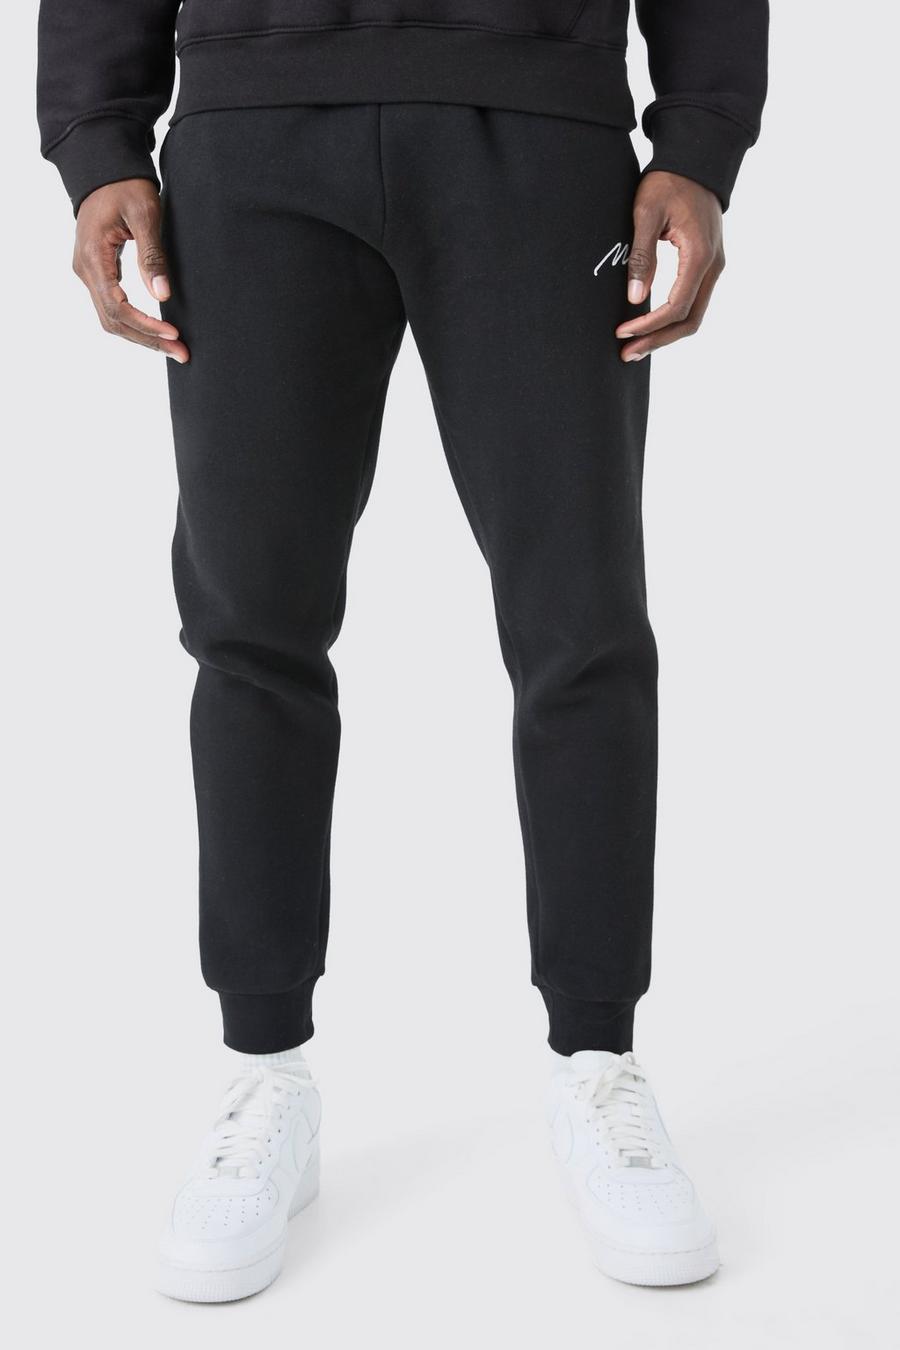 Pantalón deportivo ajustado con firma MAN, Black